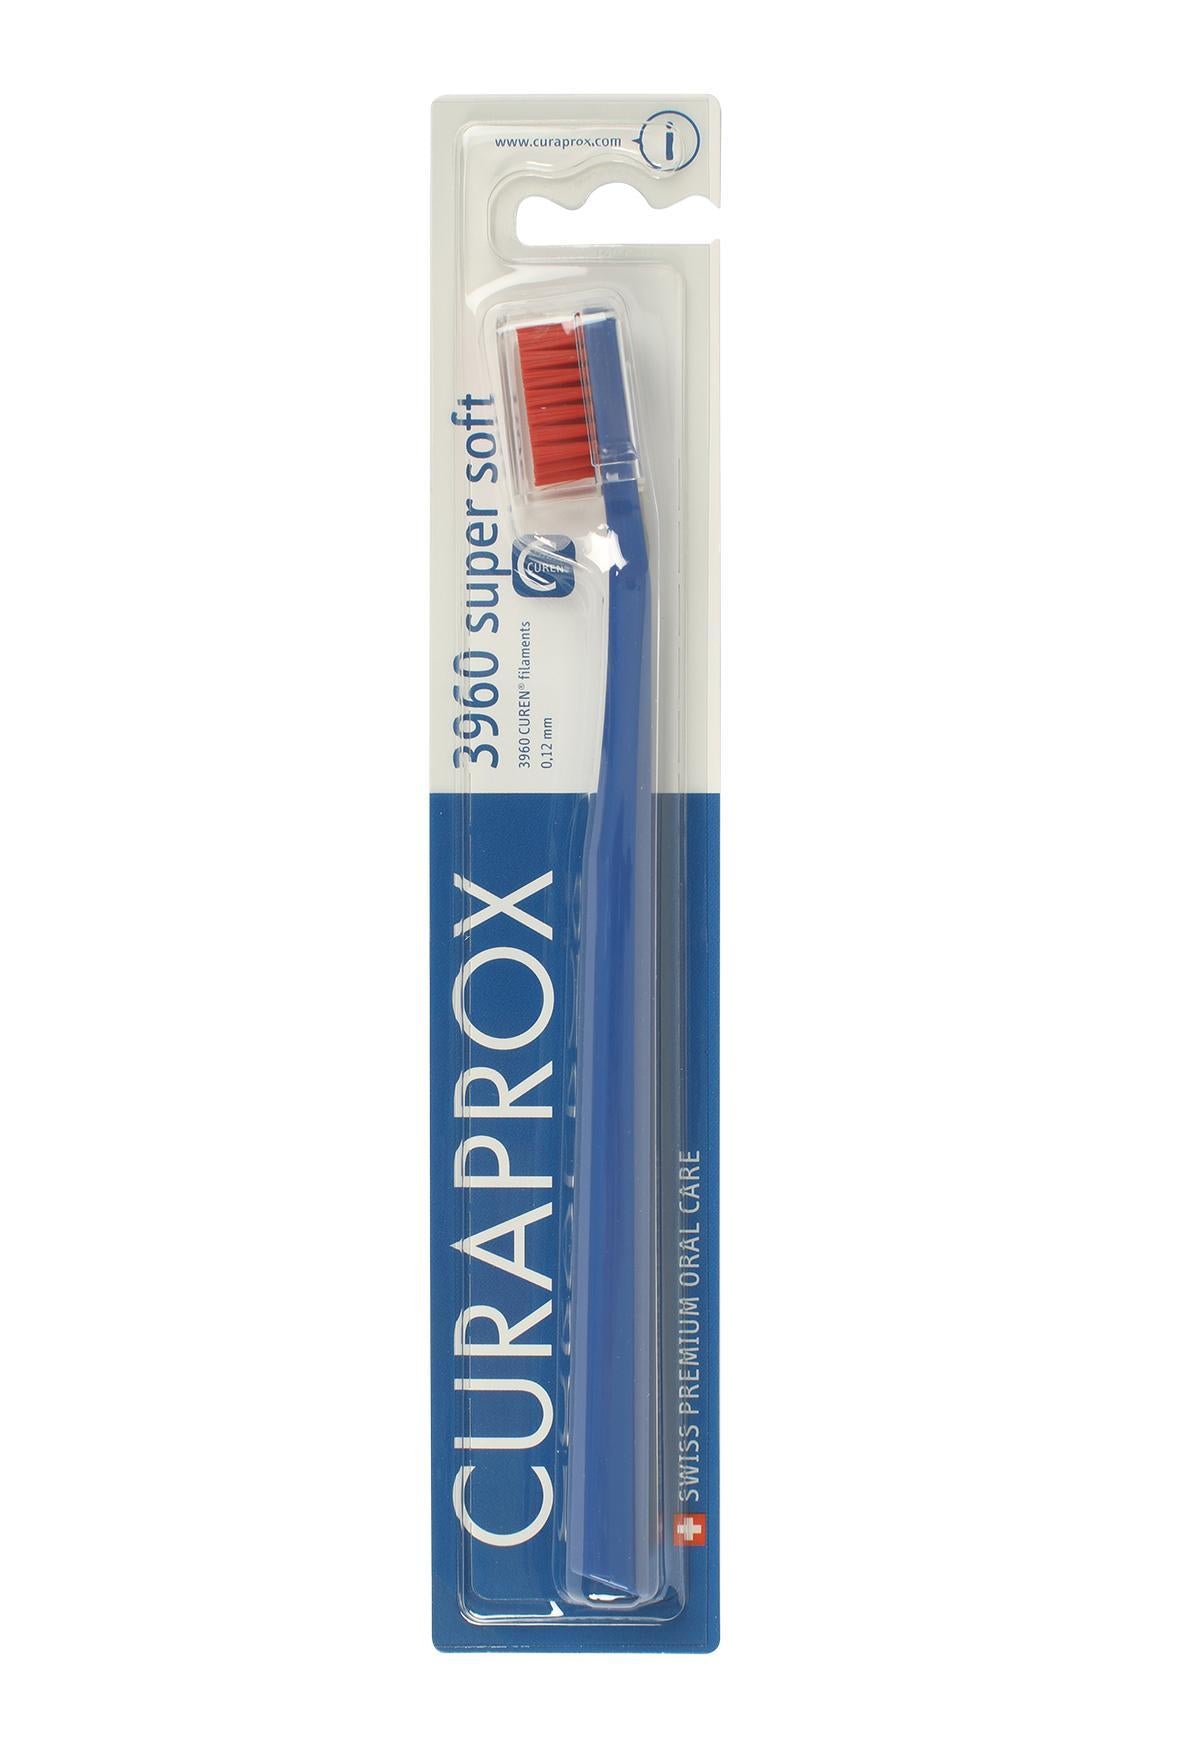 Cepillo Dental Curaprox CS 3960 Super Soft